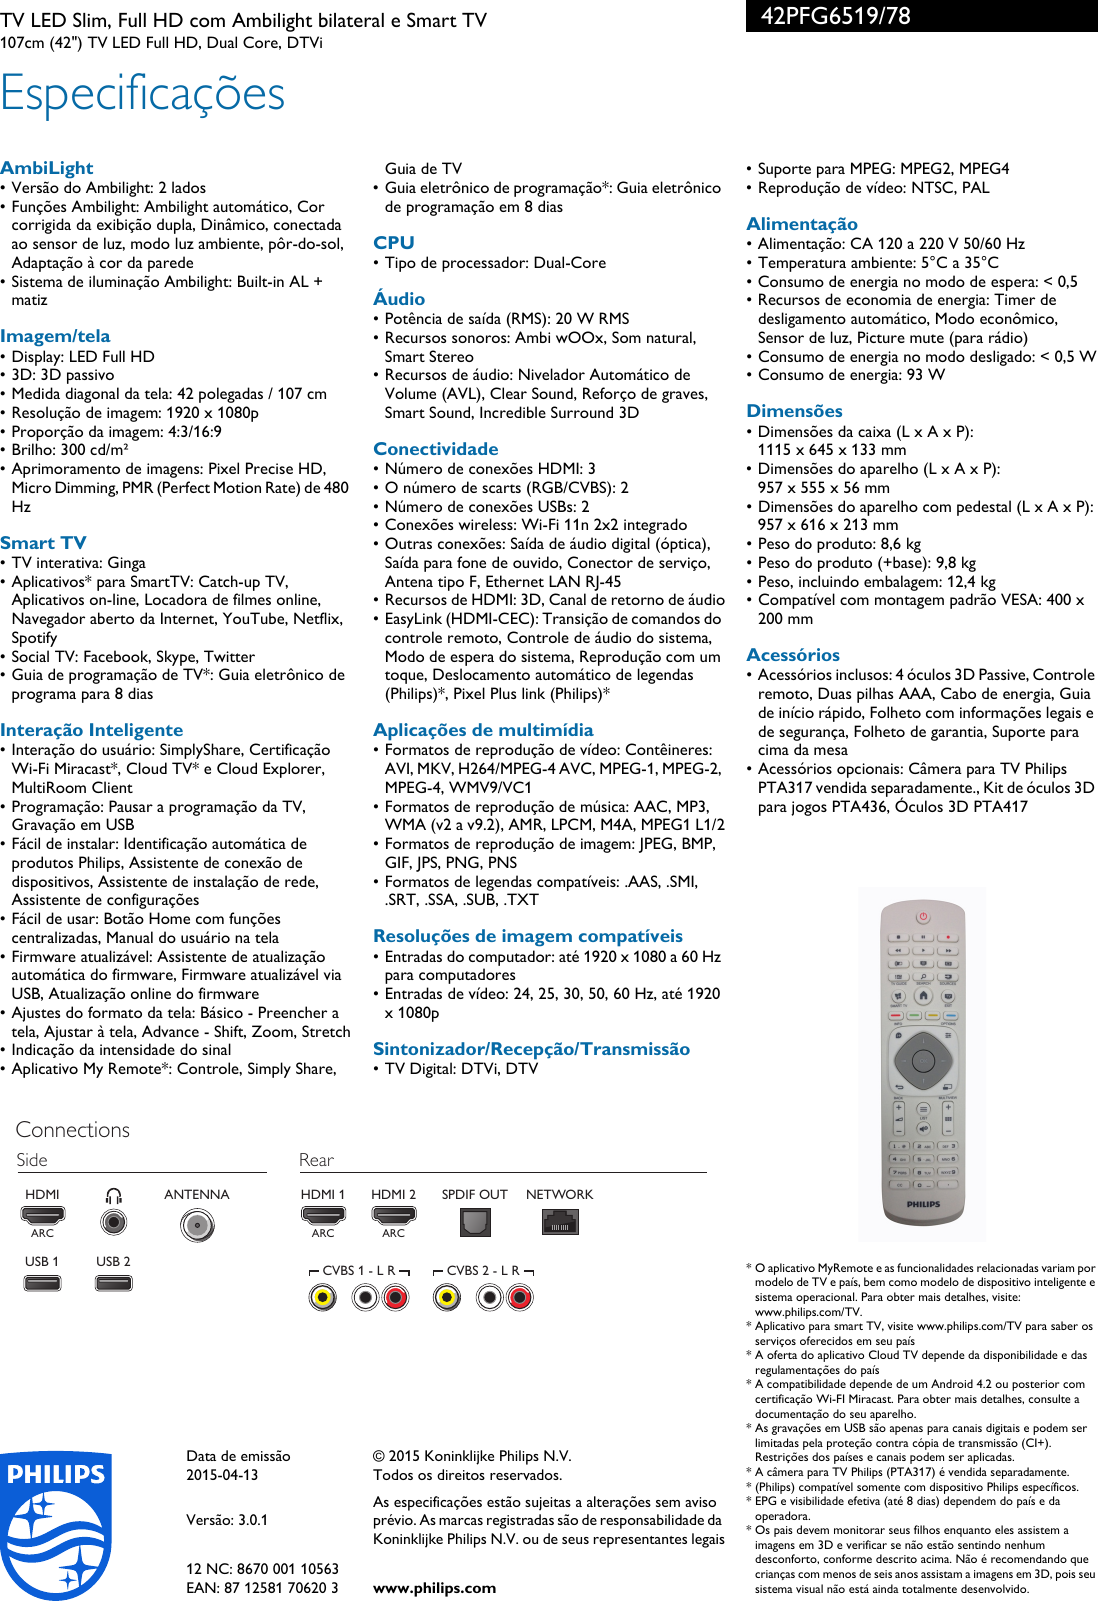 Page 3 of 3 - Philips 42PFG6519/78 TV LED Slim, Full HD Com Ambilight Bilateral E Smart User Manual Folheto 42pfg6519 78 Pss Brpbr